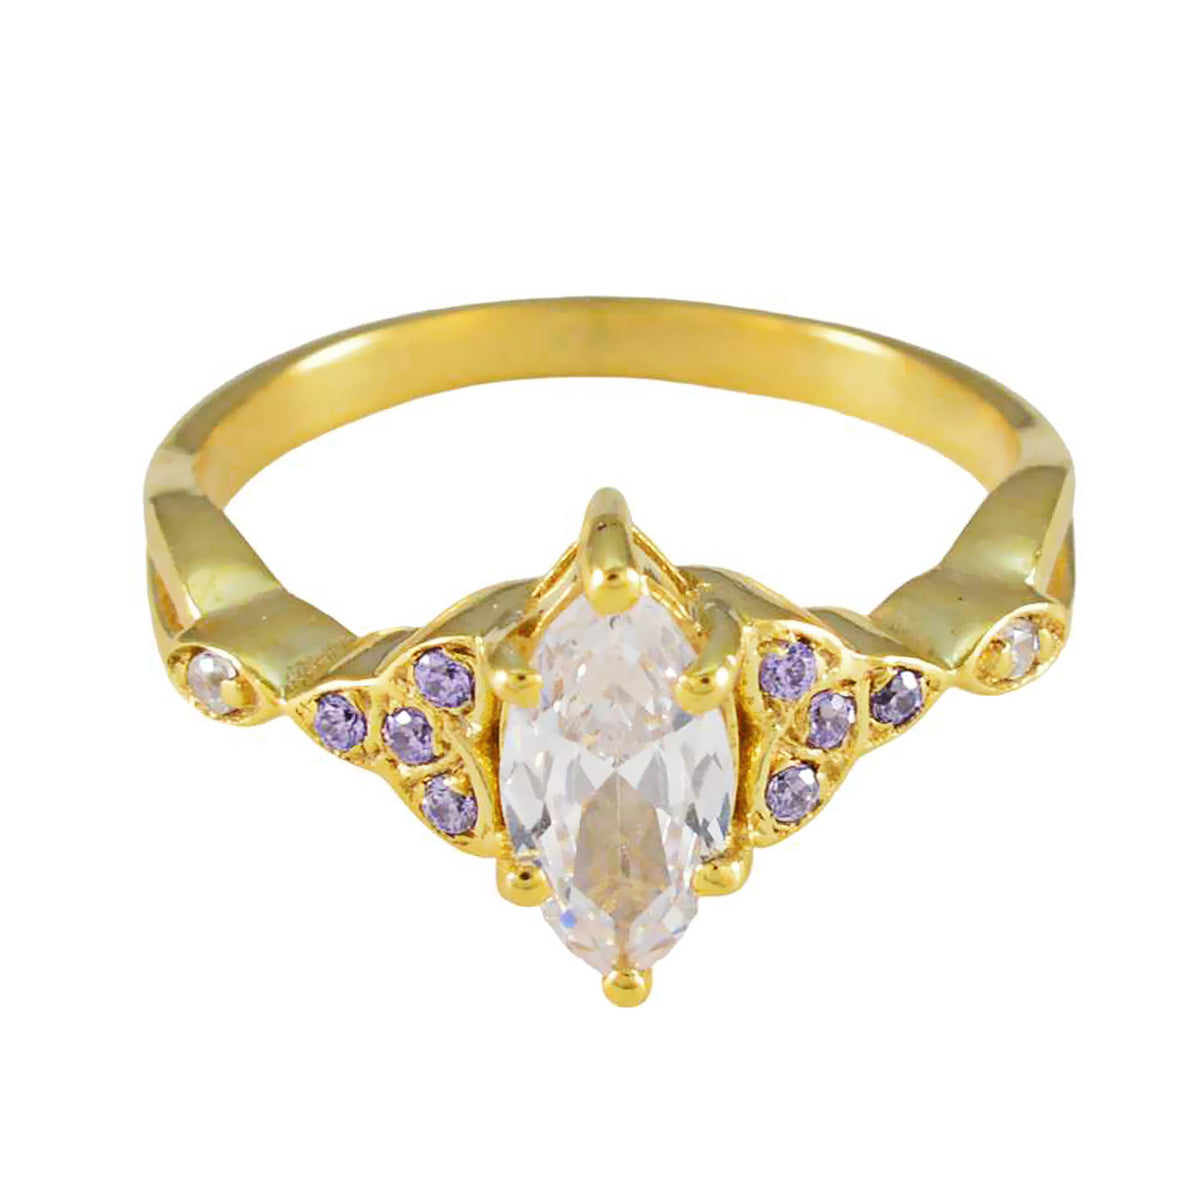 Riyo Beautiful Silver Ring With Yellow Gold Plating Amethyst Stone Marquise Shape Prong Setting Christmas Ring